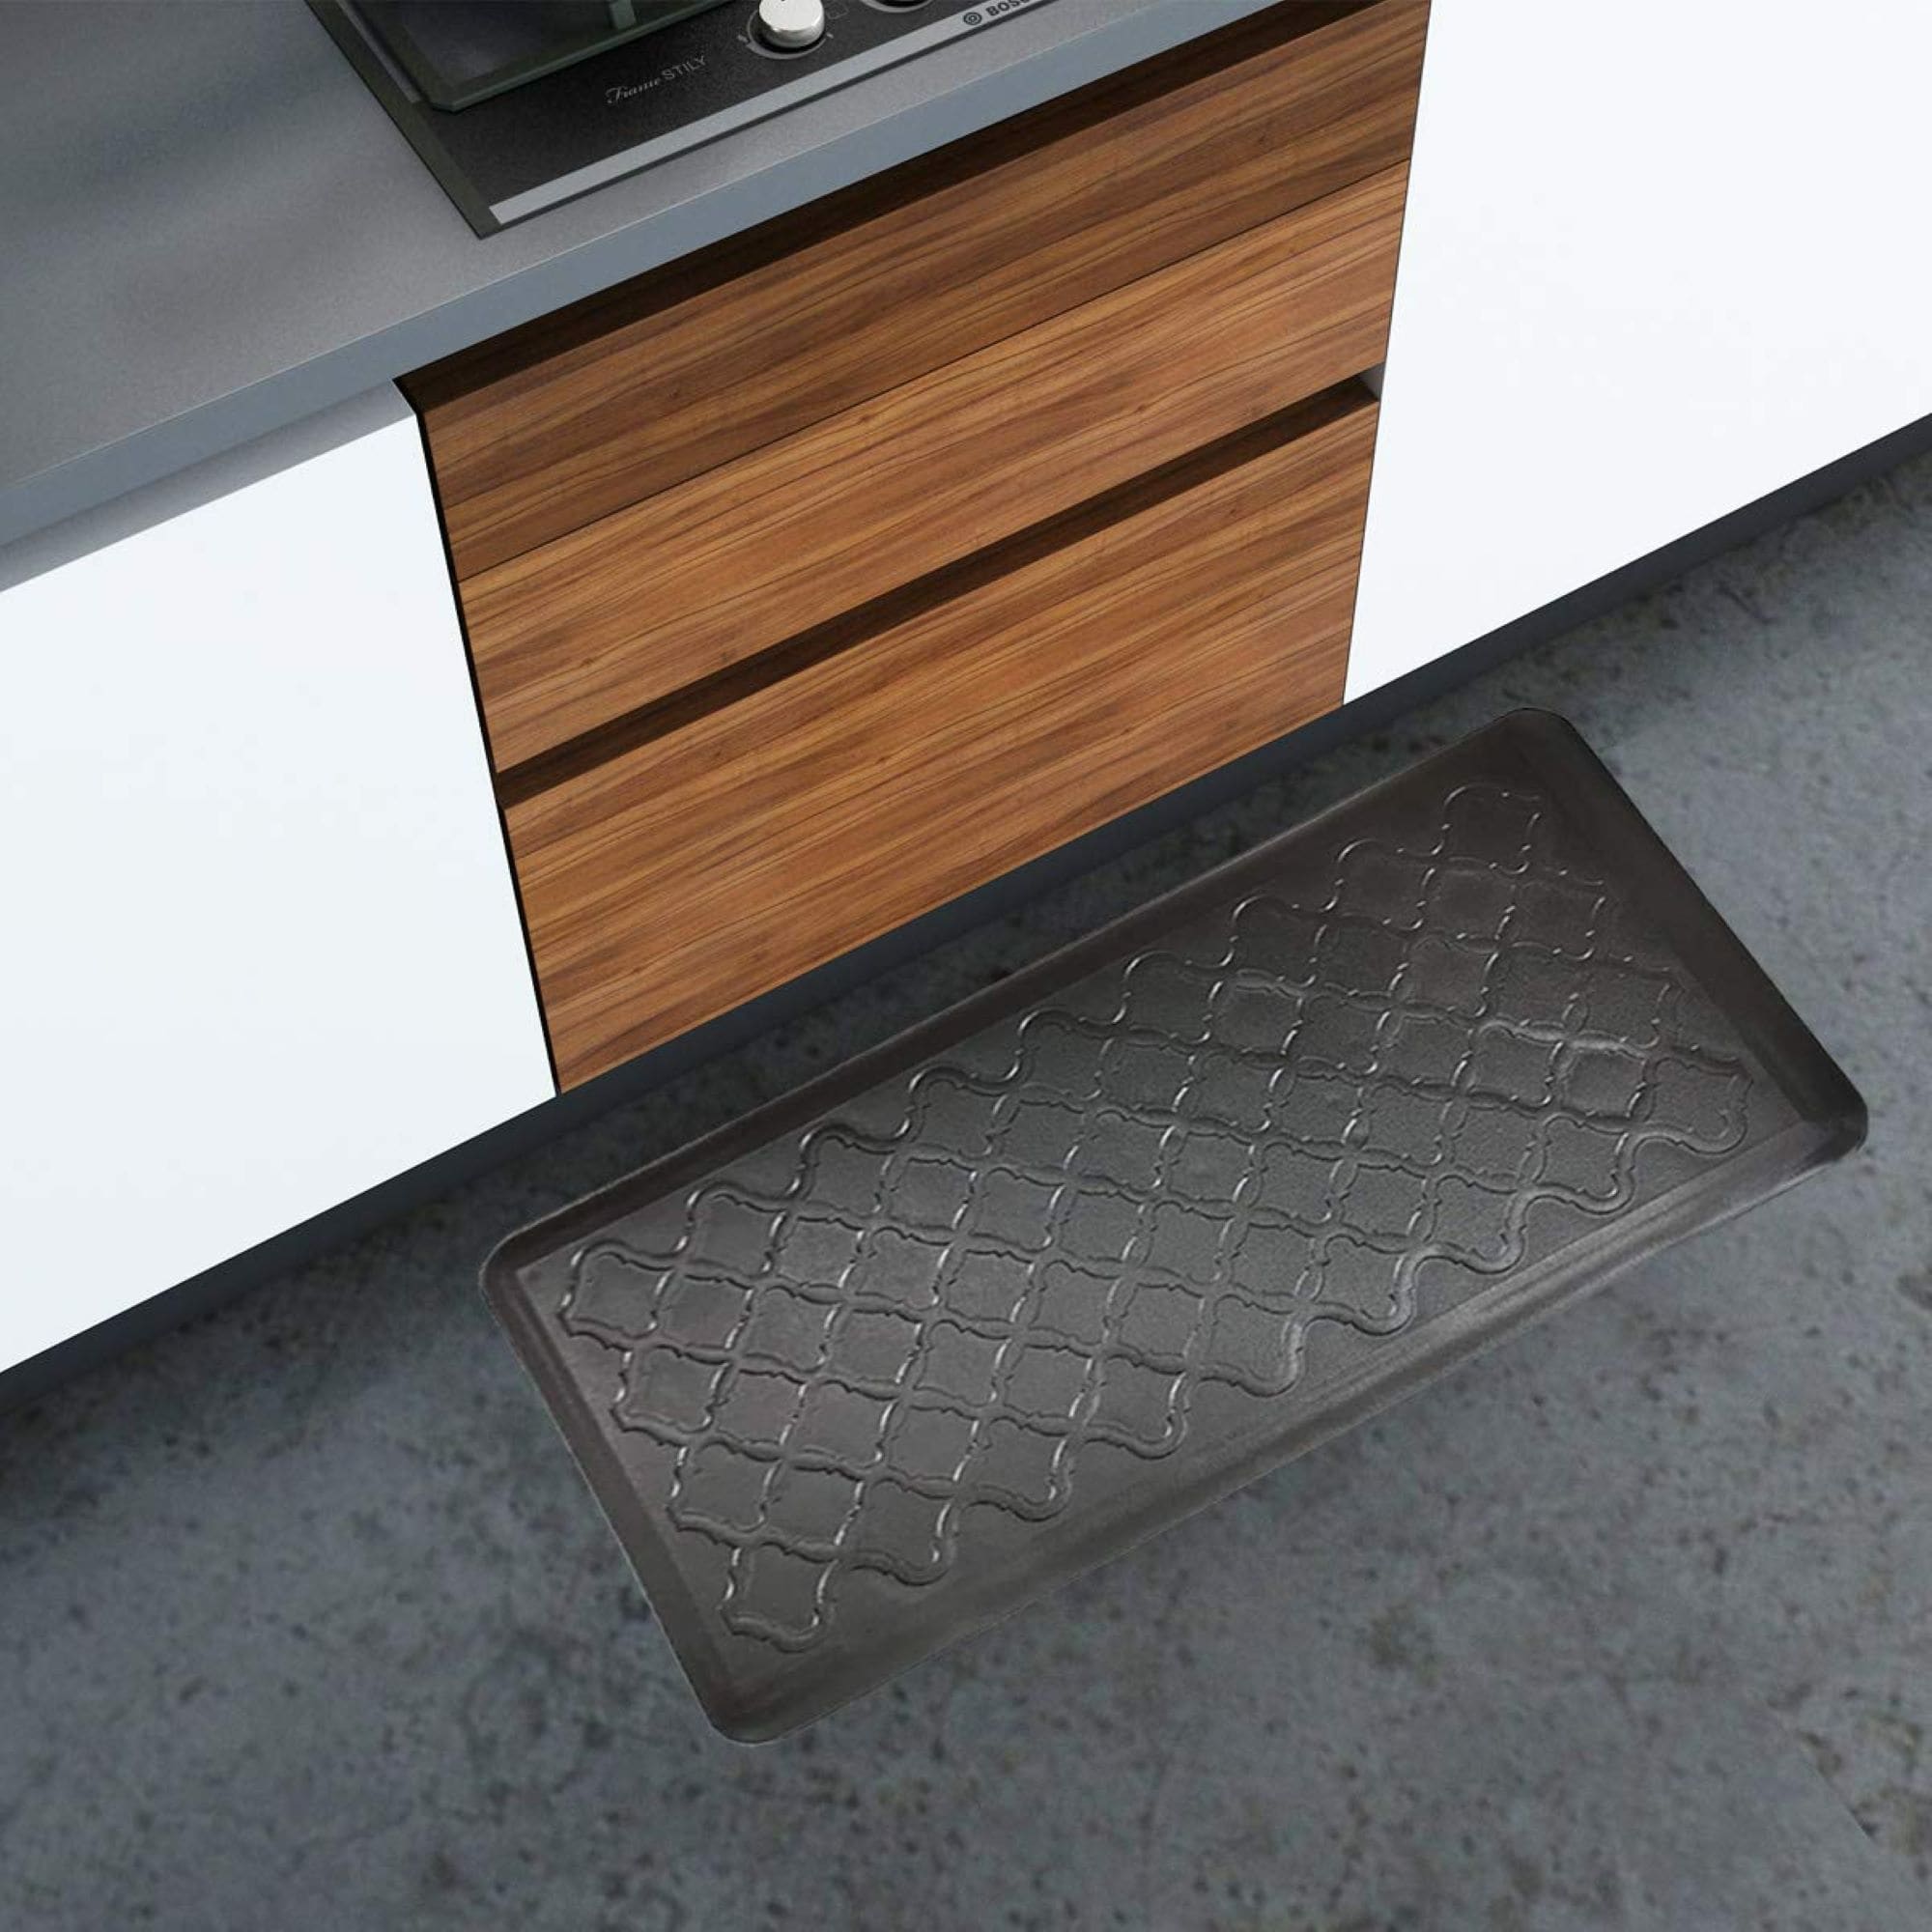 MAPLEZ Kitchen Rug Anti-Fatigue Comfort Mat Non Slip Cushioned Comfort Standing Floor Mat Kitchen Mat for Kitchen, Gaming, Office,Standing Desk